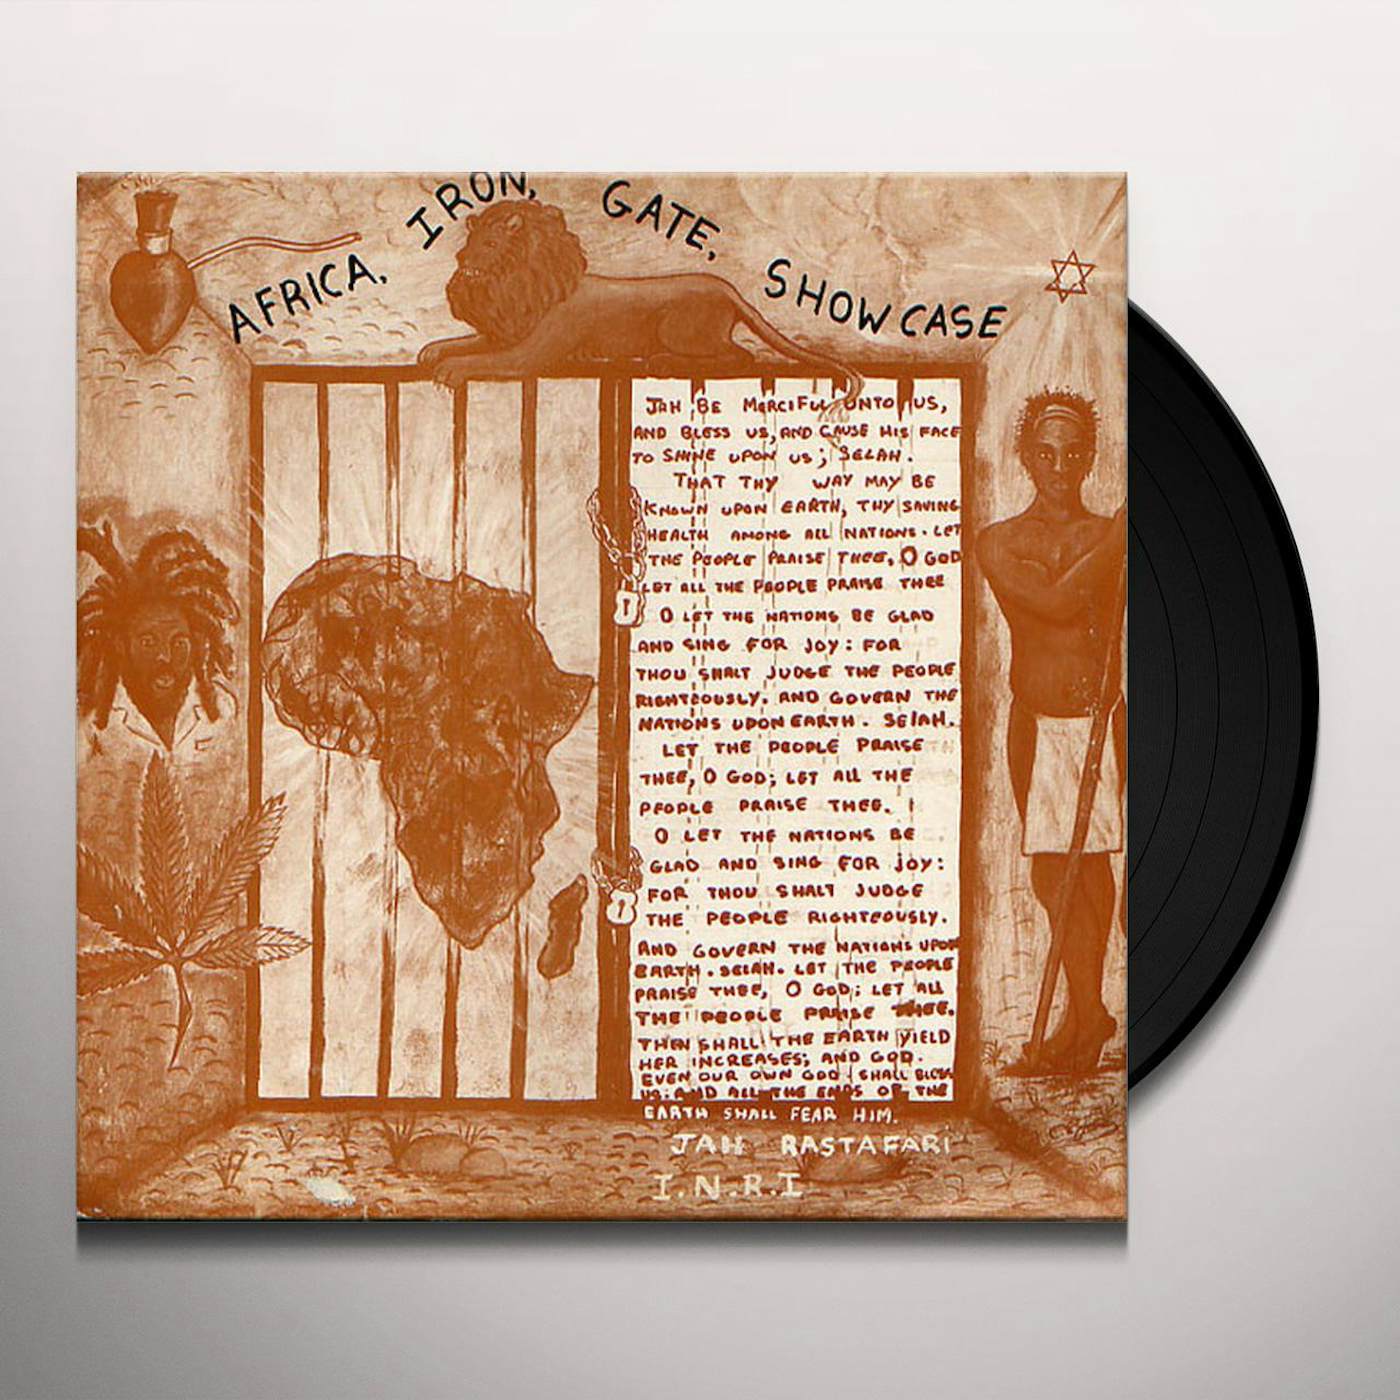 AFRICA IRON GATE SHOWCASE / VARIOUS Vinyl Record